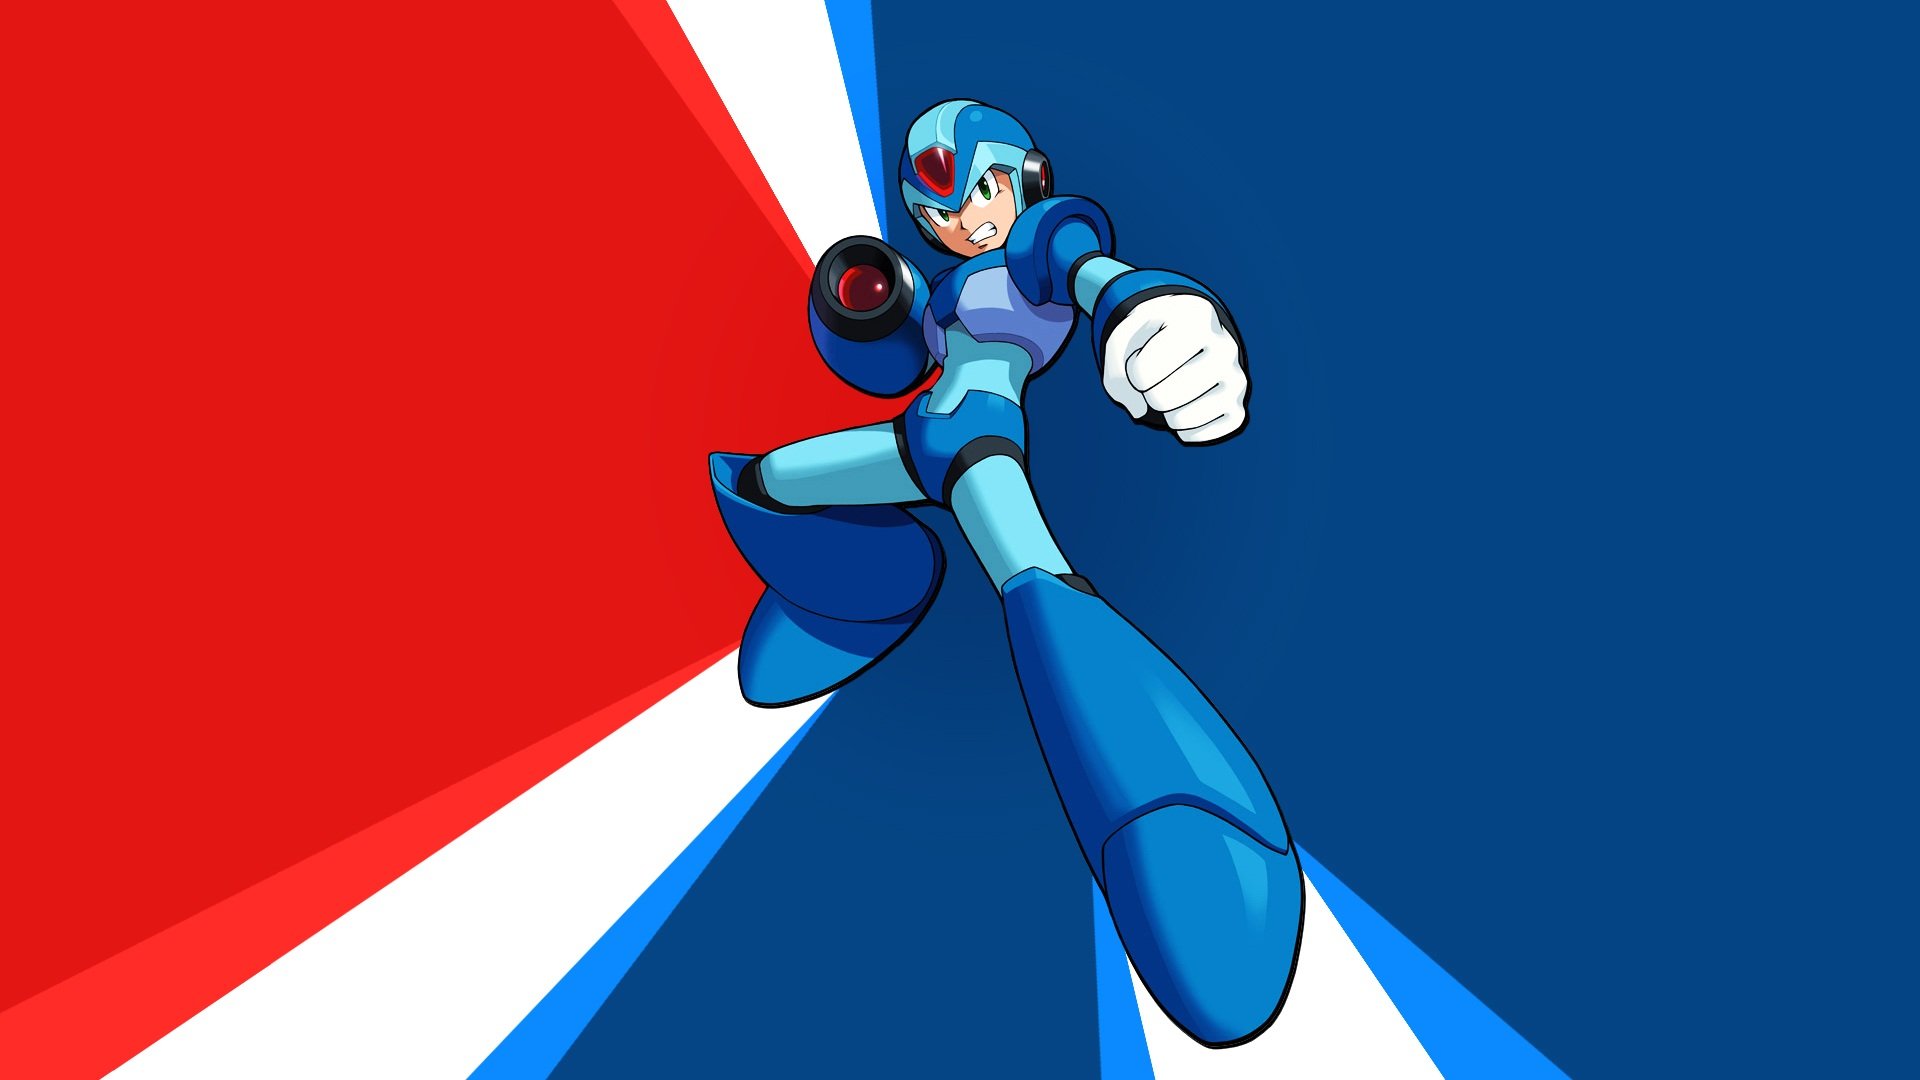 Awesome Mega Man free wallpaper ID:29129 for hd 1920x1080 desktop